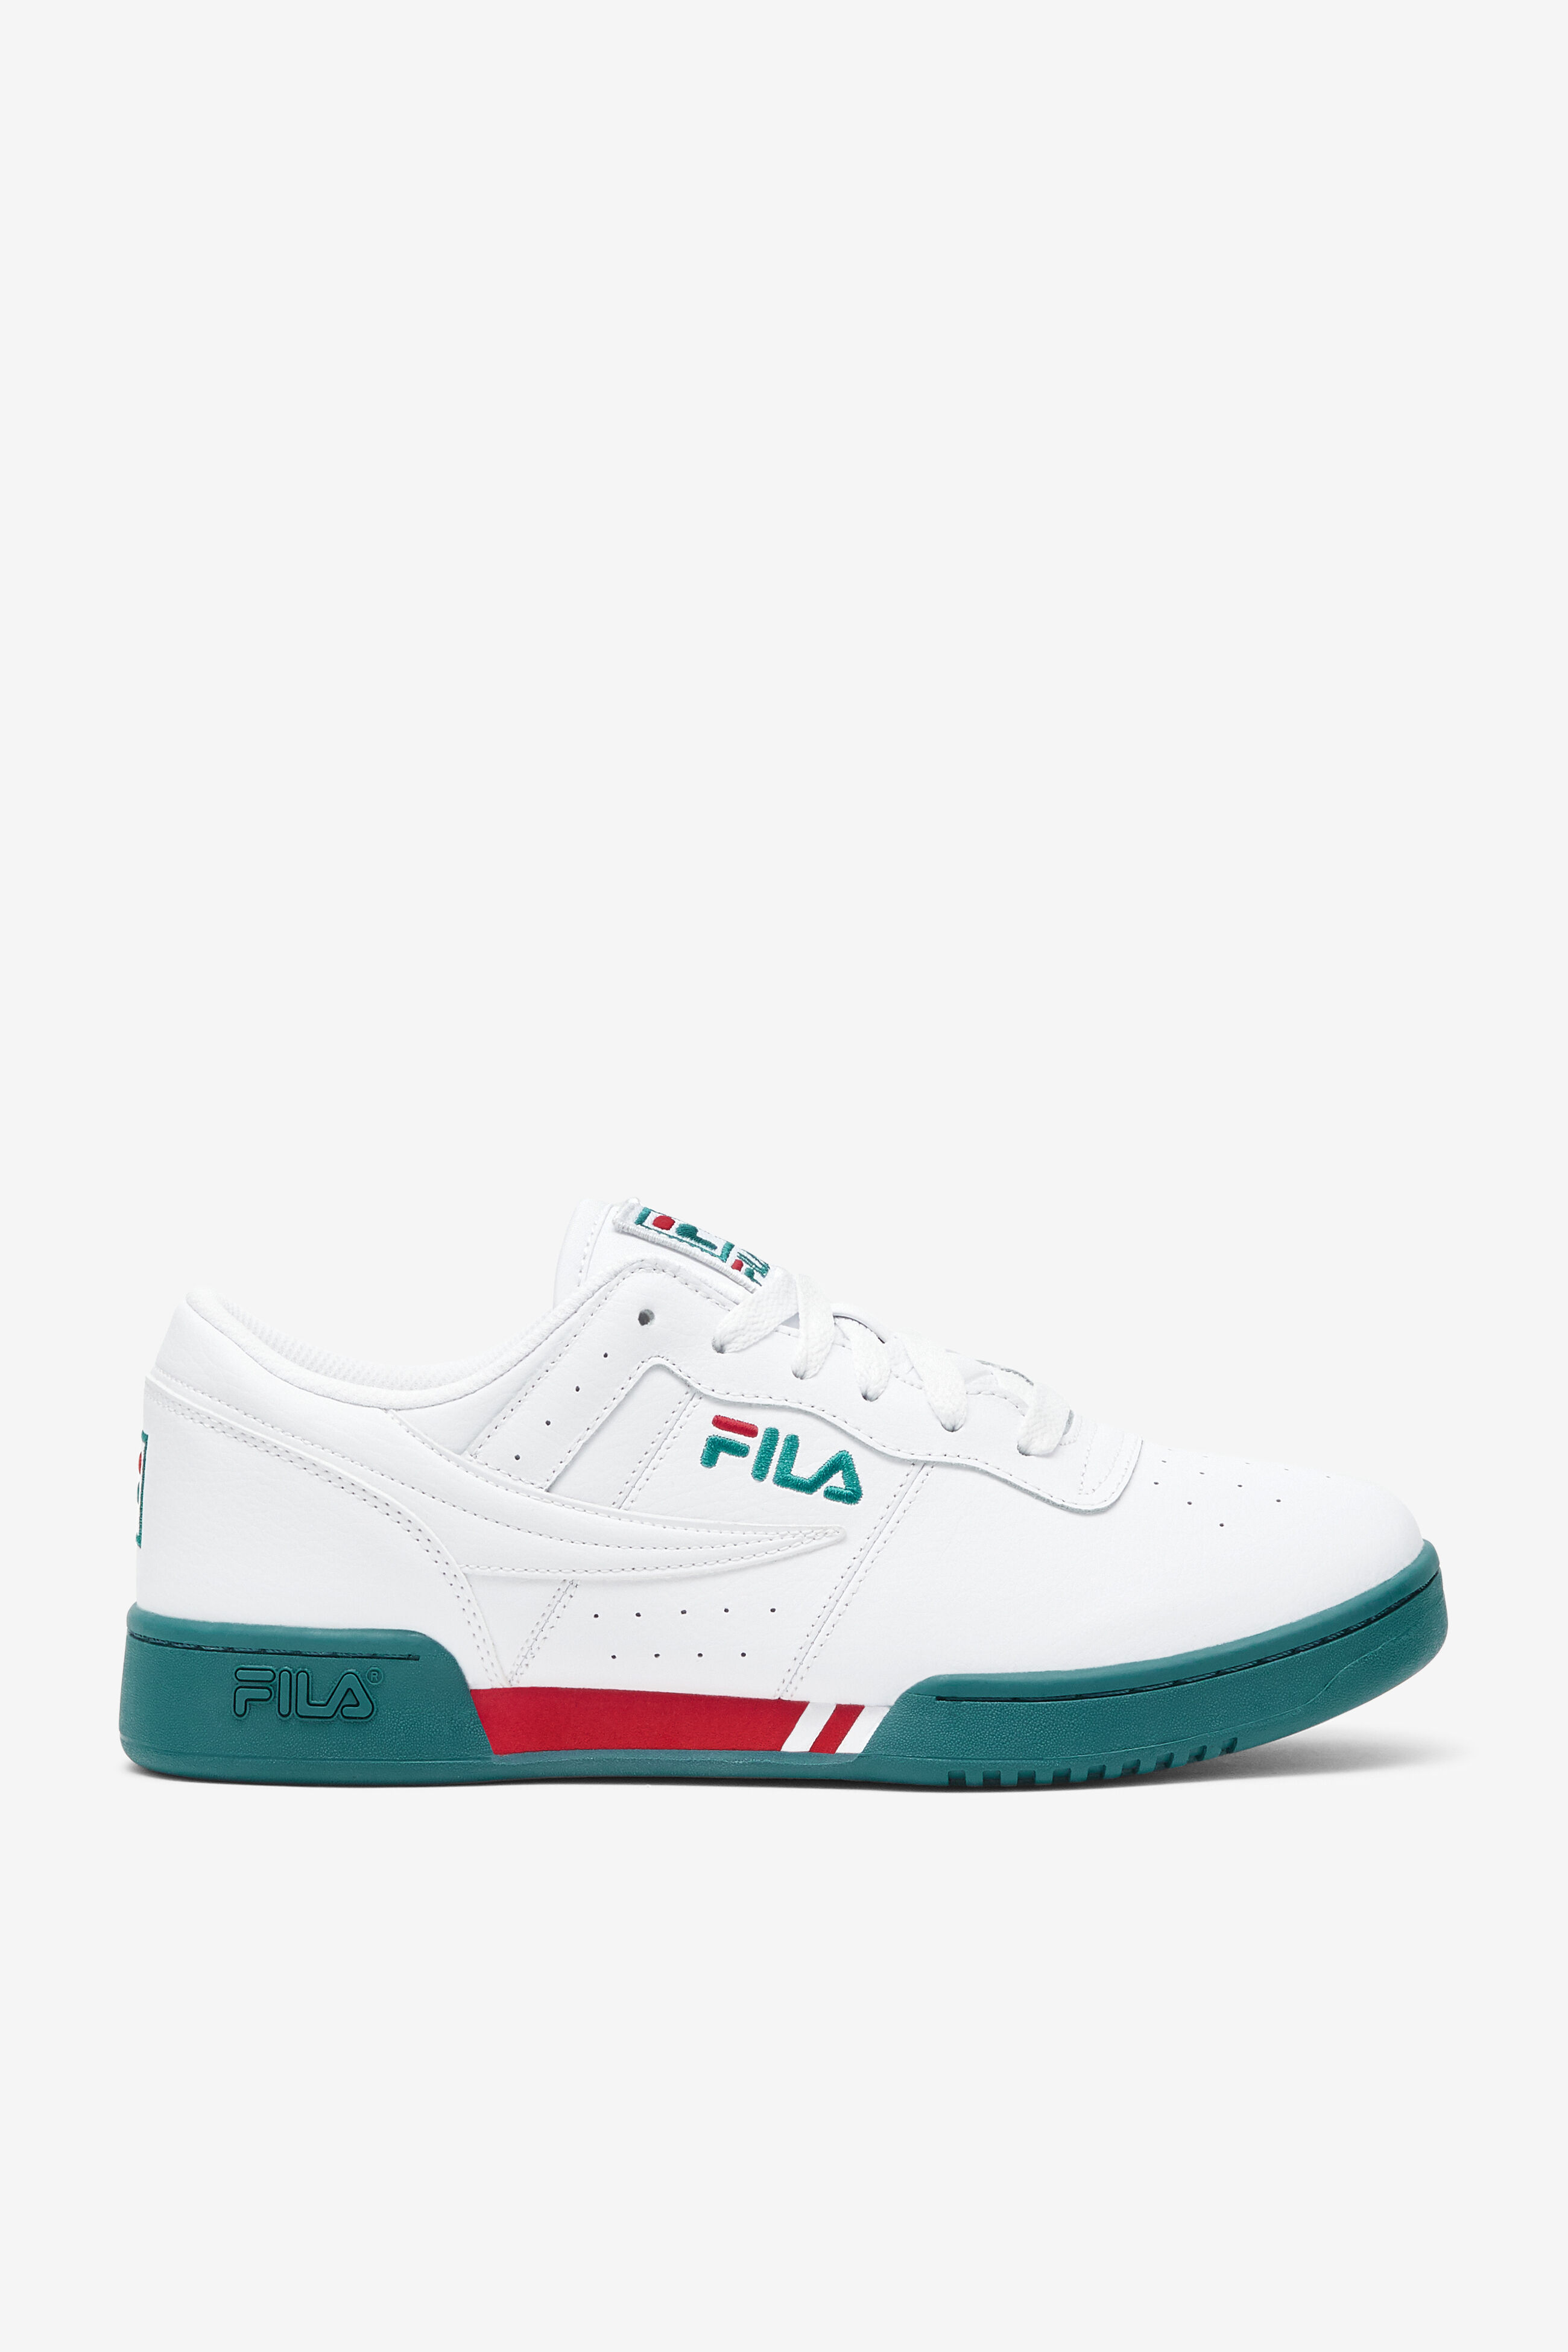 FILA - Giày sneakers nữ cổ thấp Disruptor 2 EXP